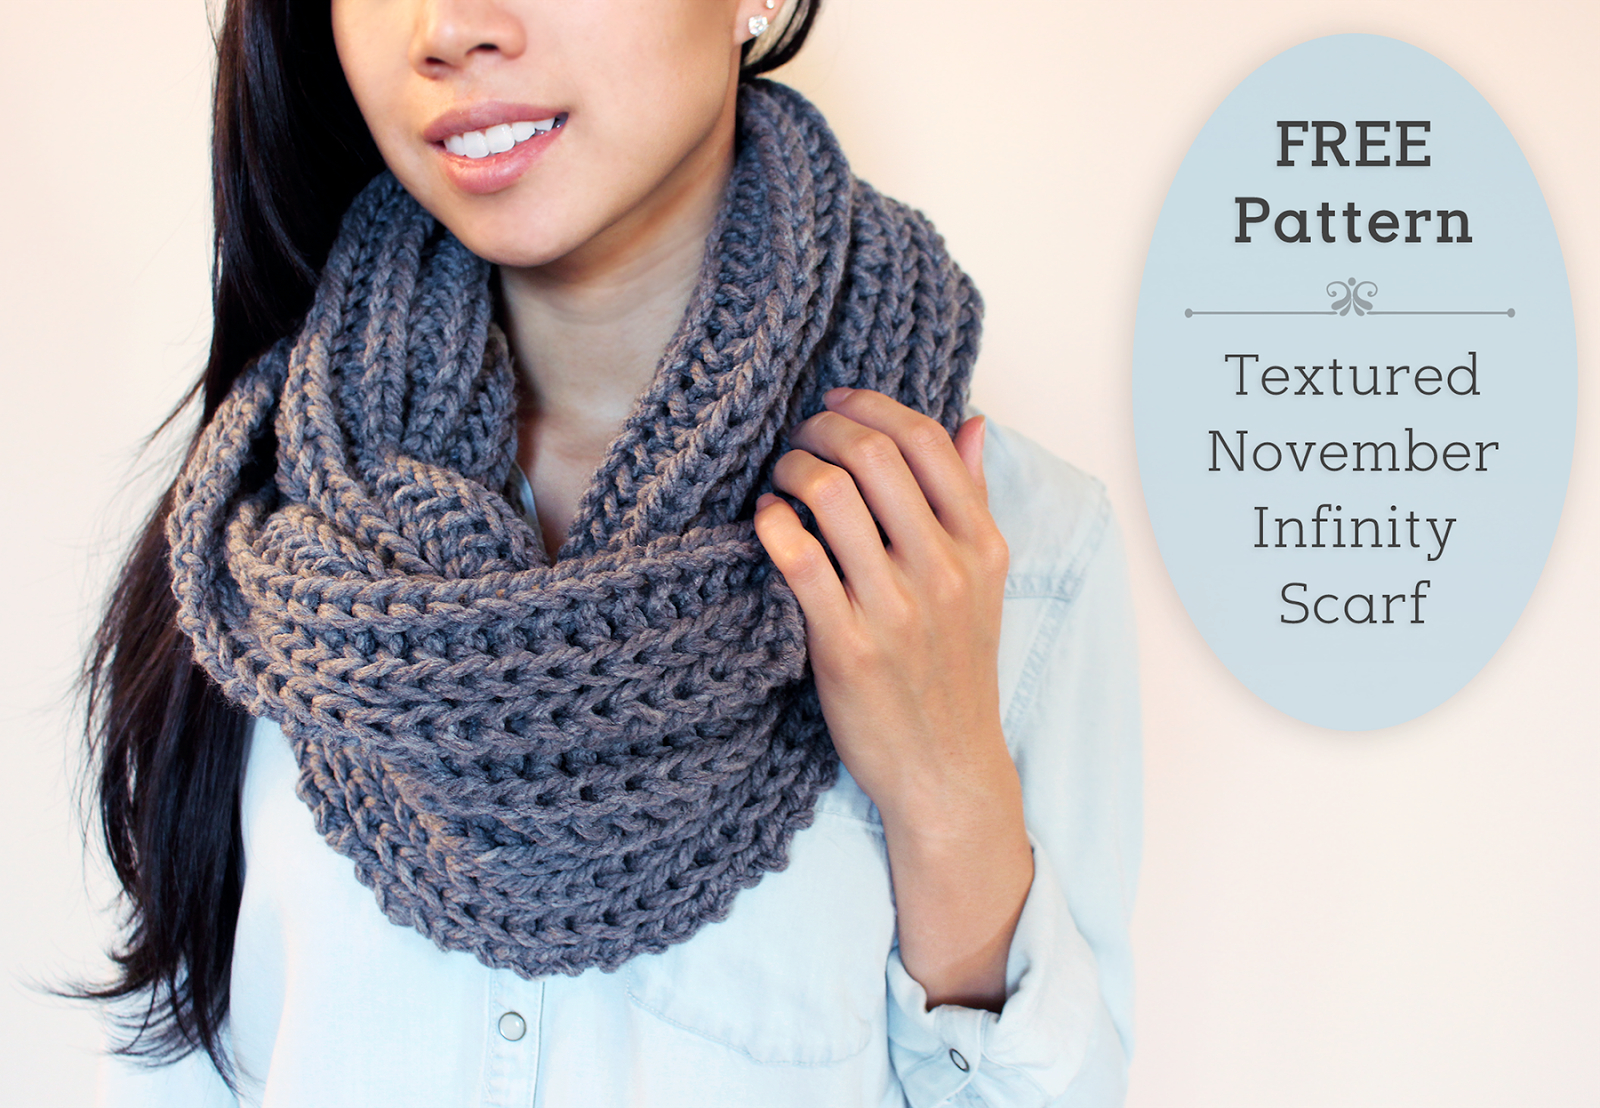 Free Bulky Knitting Patterns Purllin Textured November Infinity Scarf Free Pattern